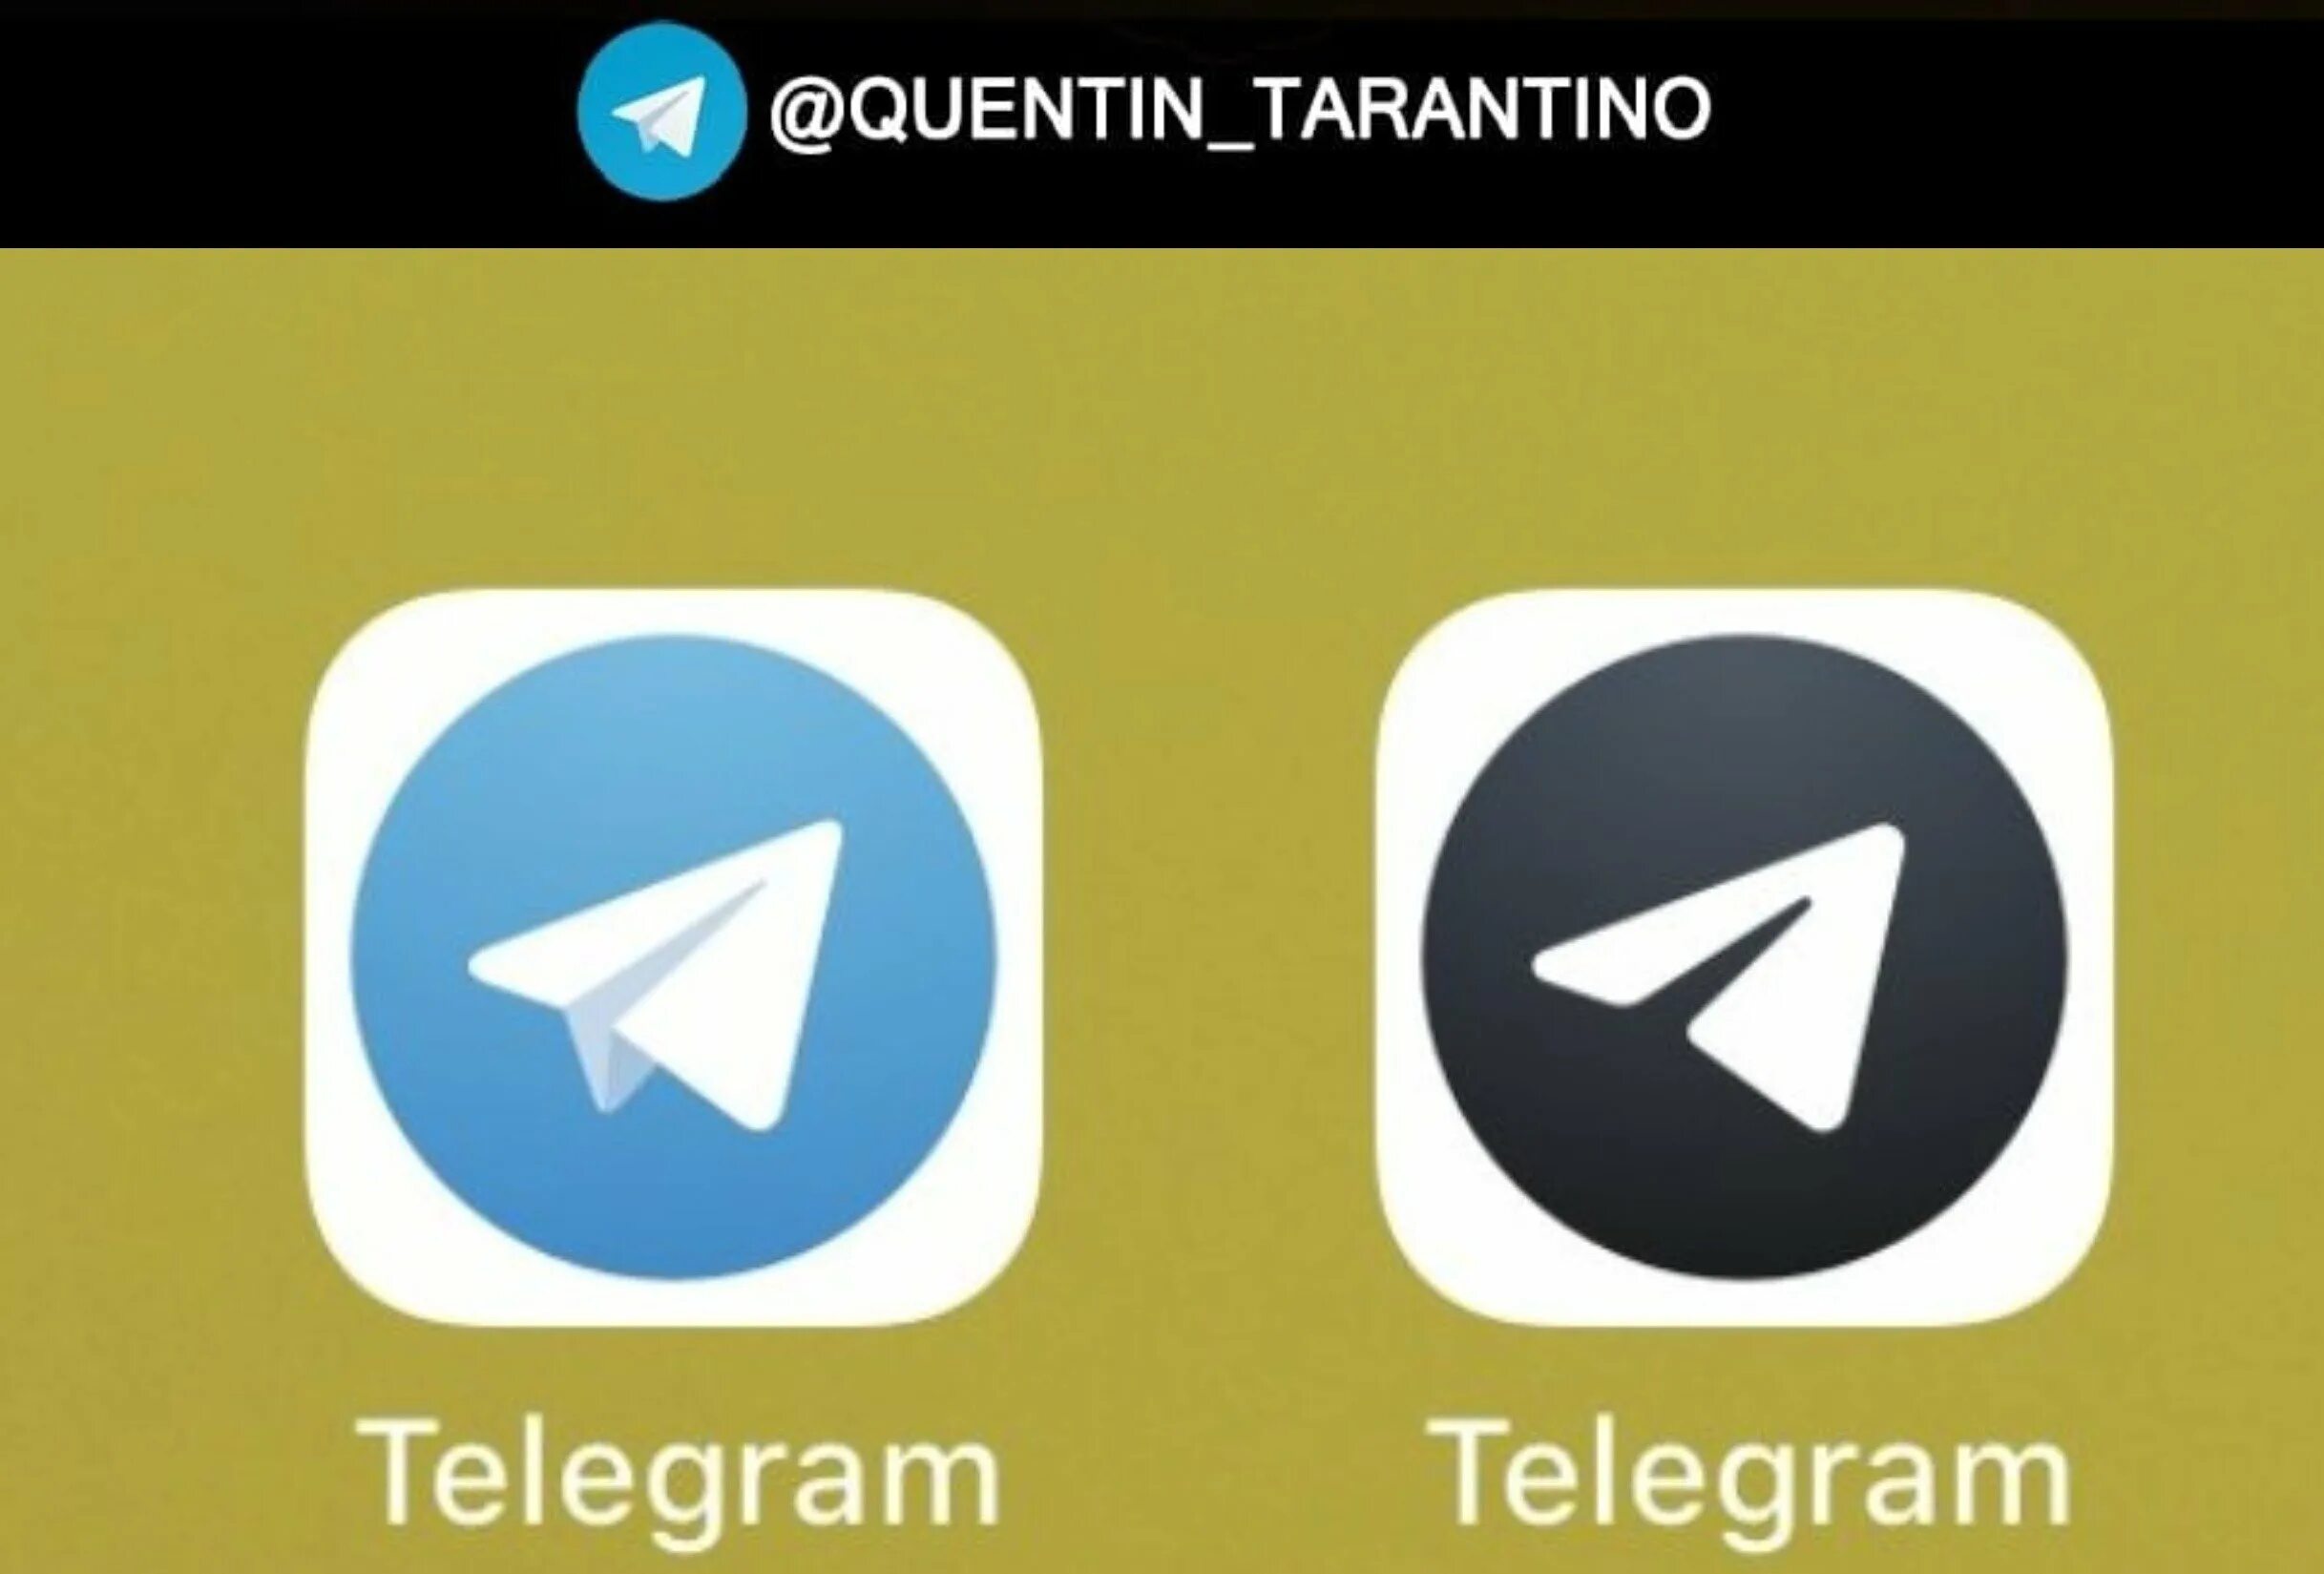 Иконка телеграмм. Пиктограмма телеграмм. Значок приложения телеграмм. Икона телеграмма. Пали мой телеграмм